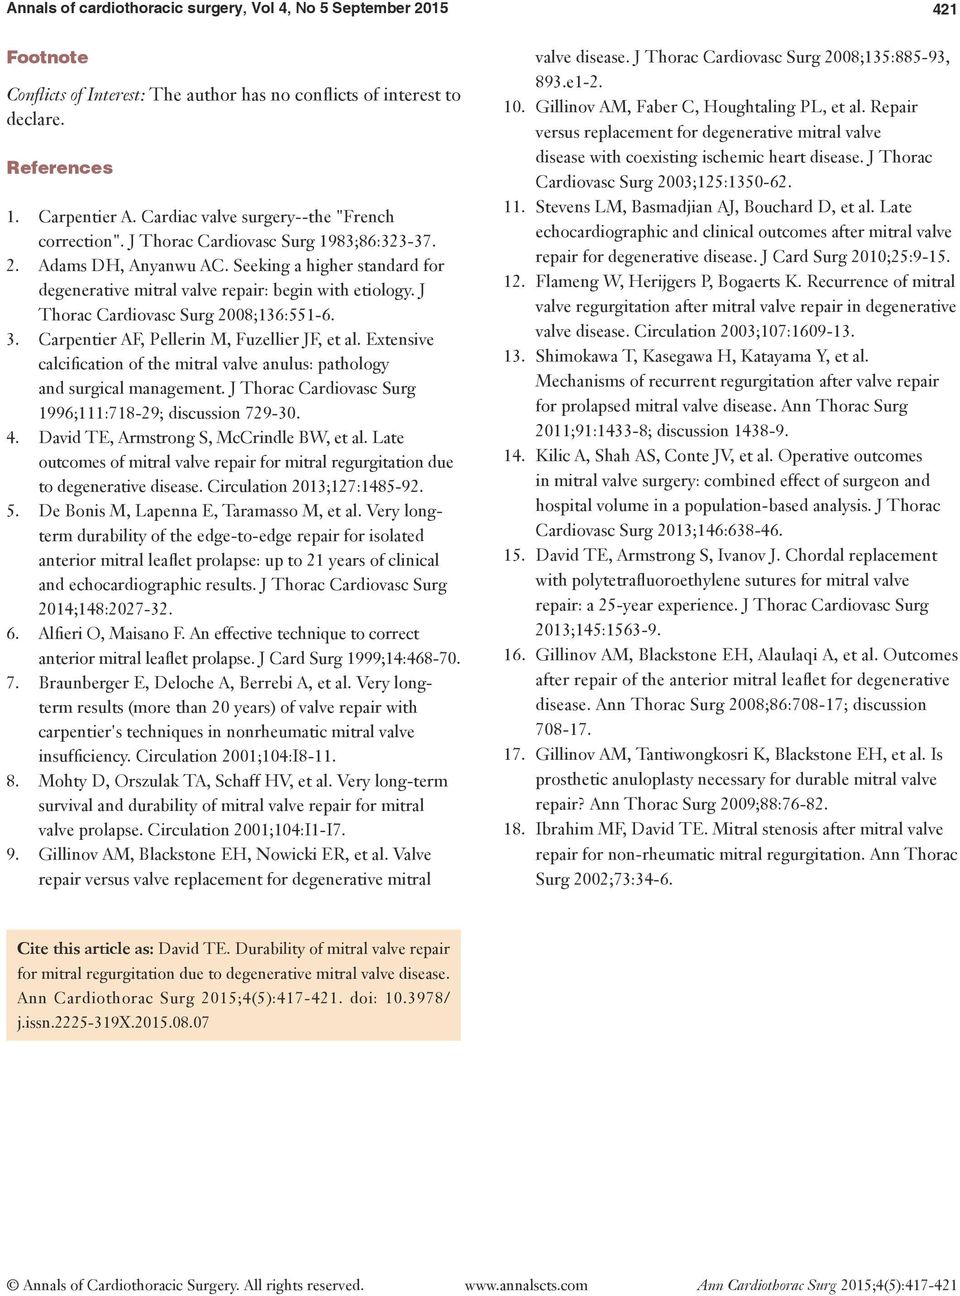 J Thorac Cardiovasc Surg 2008;136:551-6. 3. Carpentier AF, Pellerin M, Fuzellier JF, et al. Extensive calcification of the mitral valve anulus: pathology and surgical management.